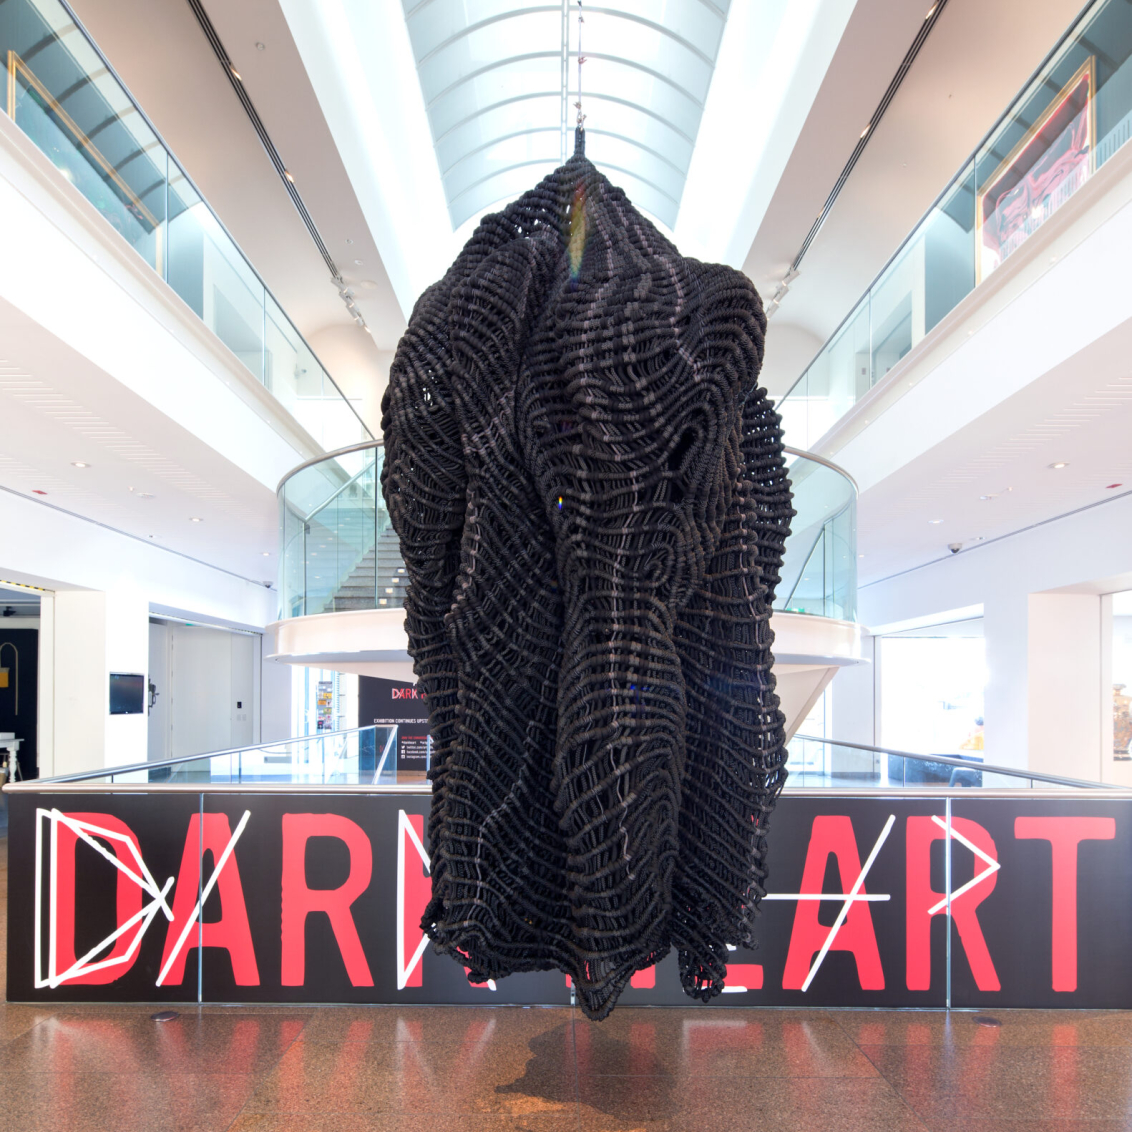 Adelaide Biennial- Dark Heart